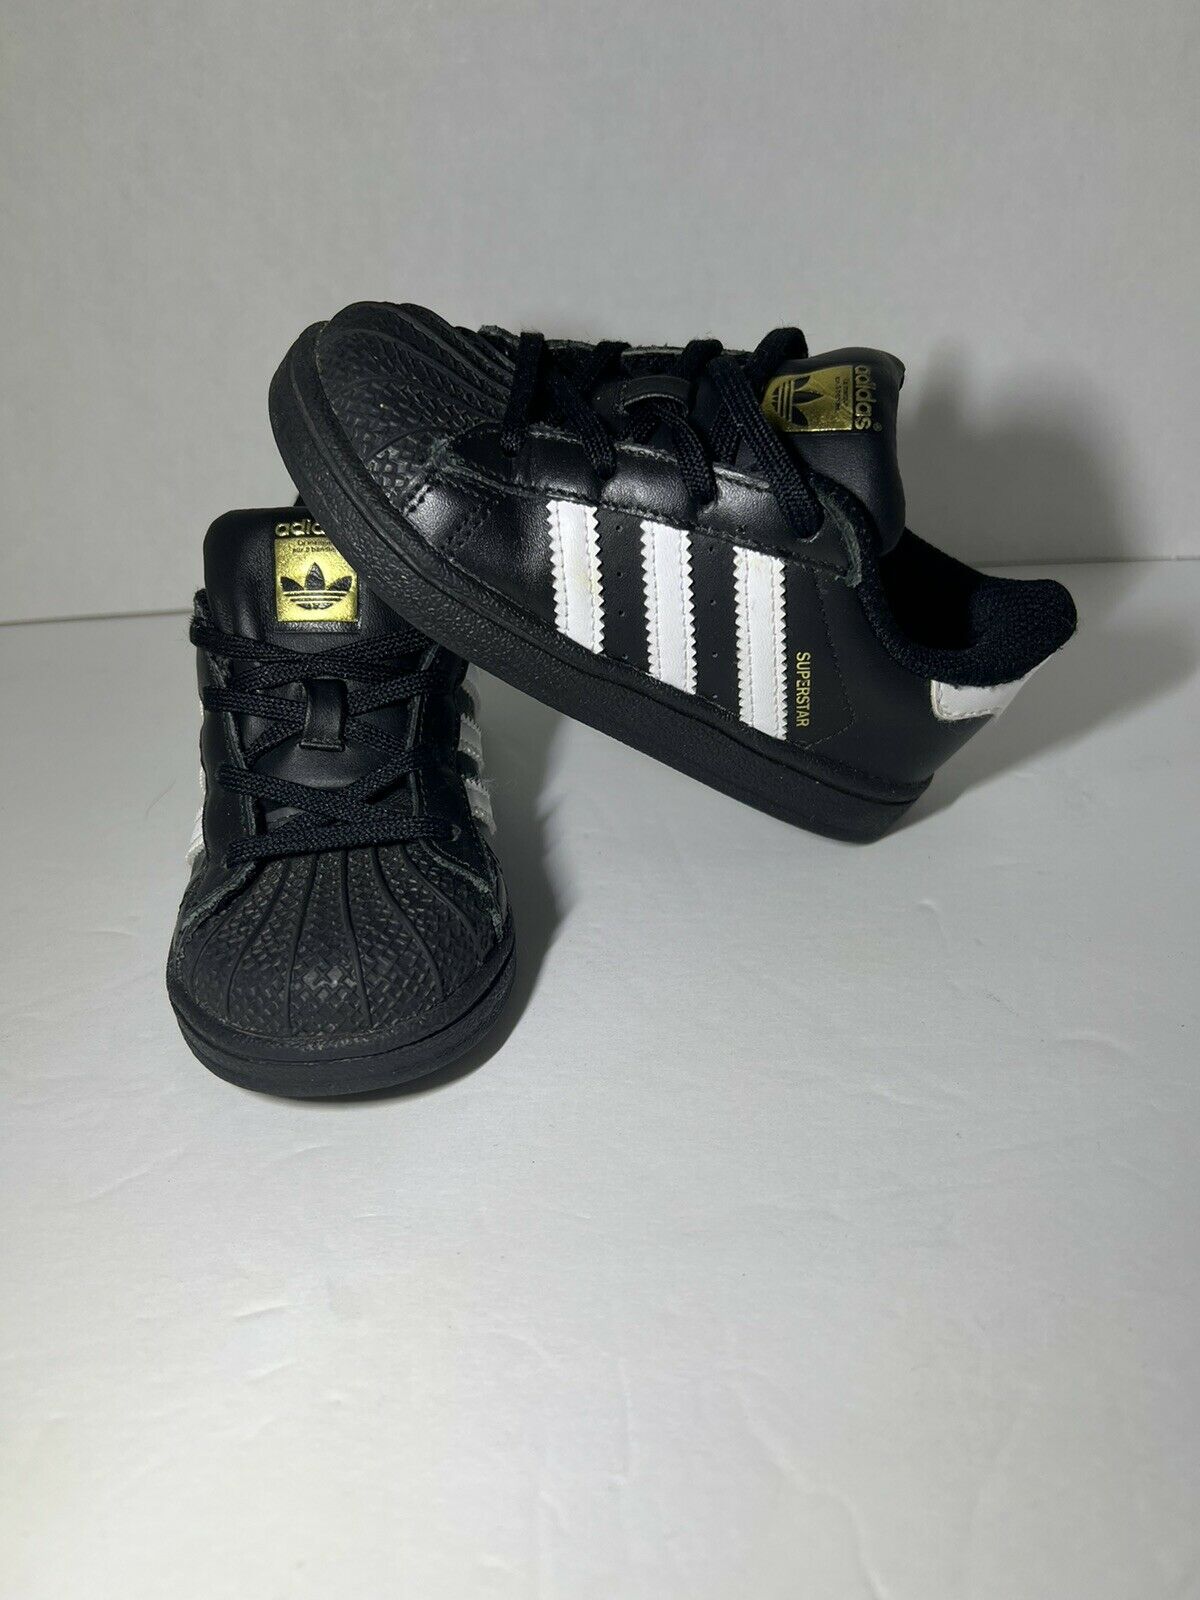 Adidas Superstar BB9078 baby toddler shoes black white gold kids Size 8K